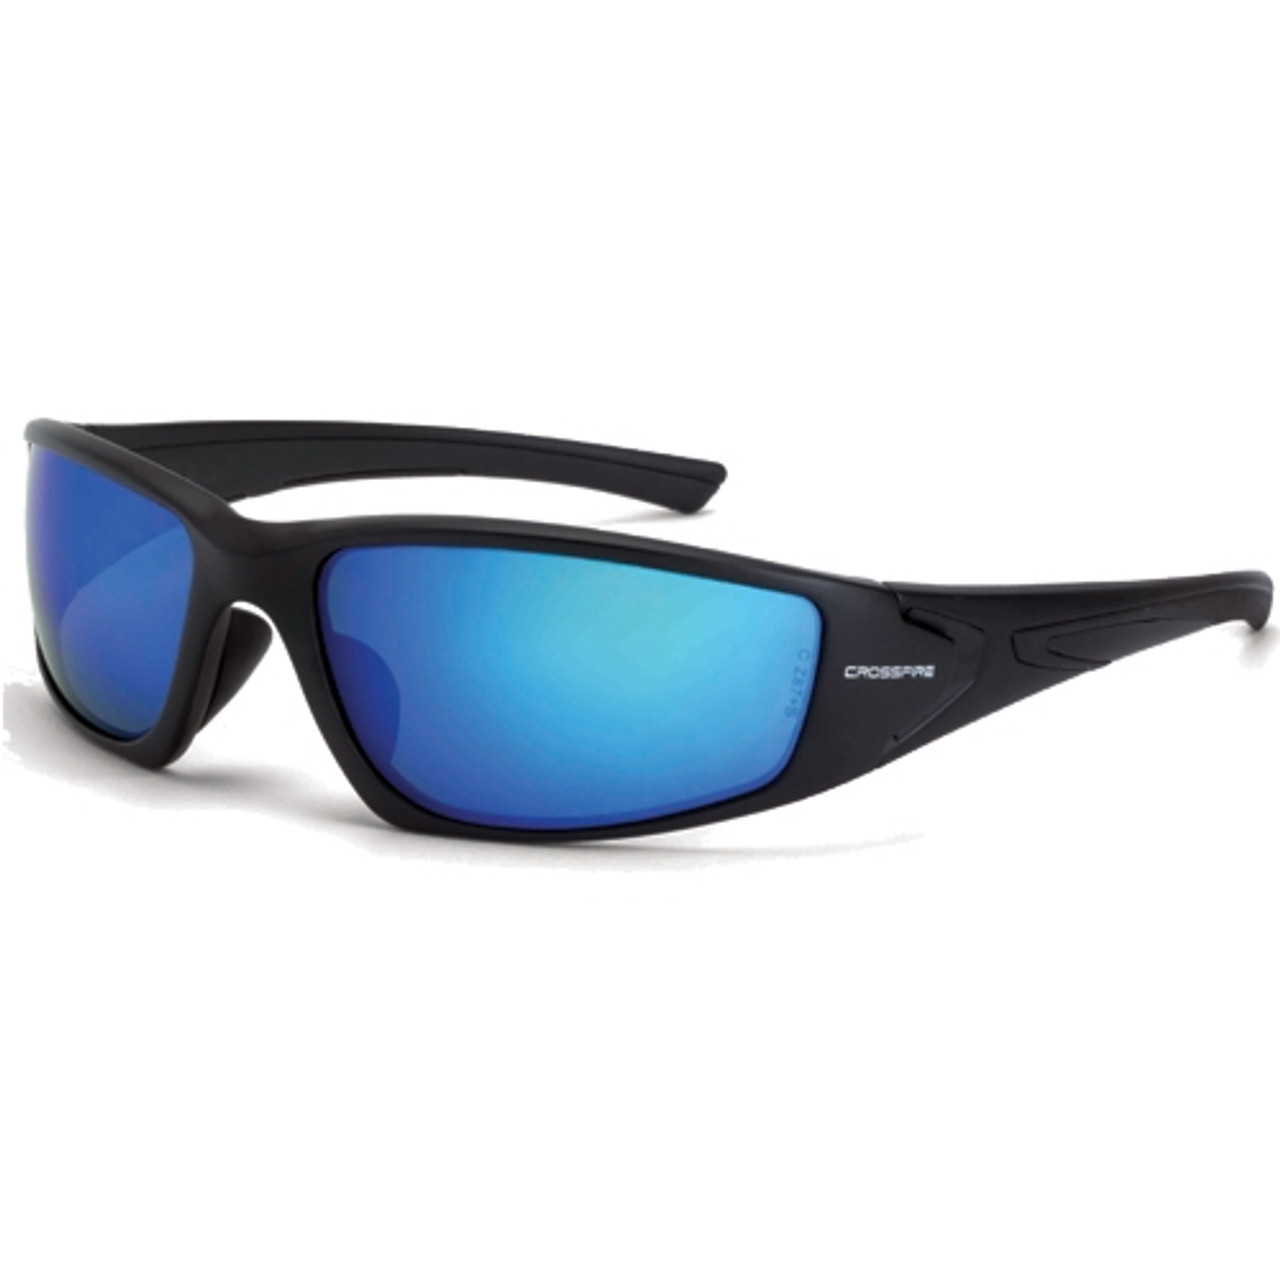 Crossfire Eyewear 23226 Rpg Polarized Safety Glasses - Sunglasses 